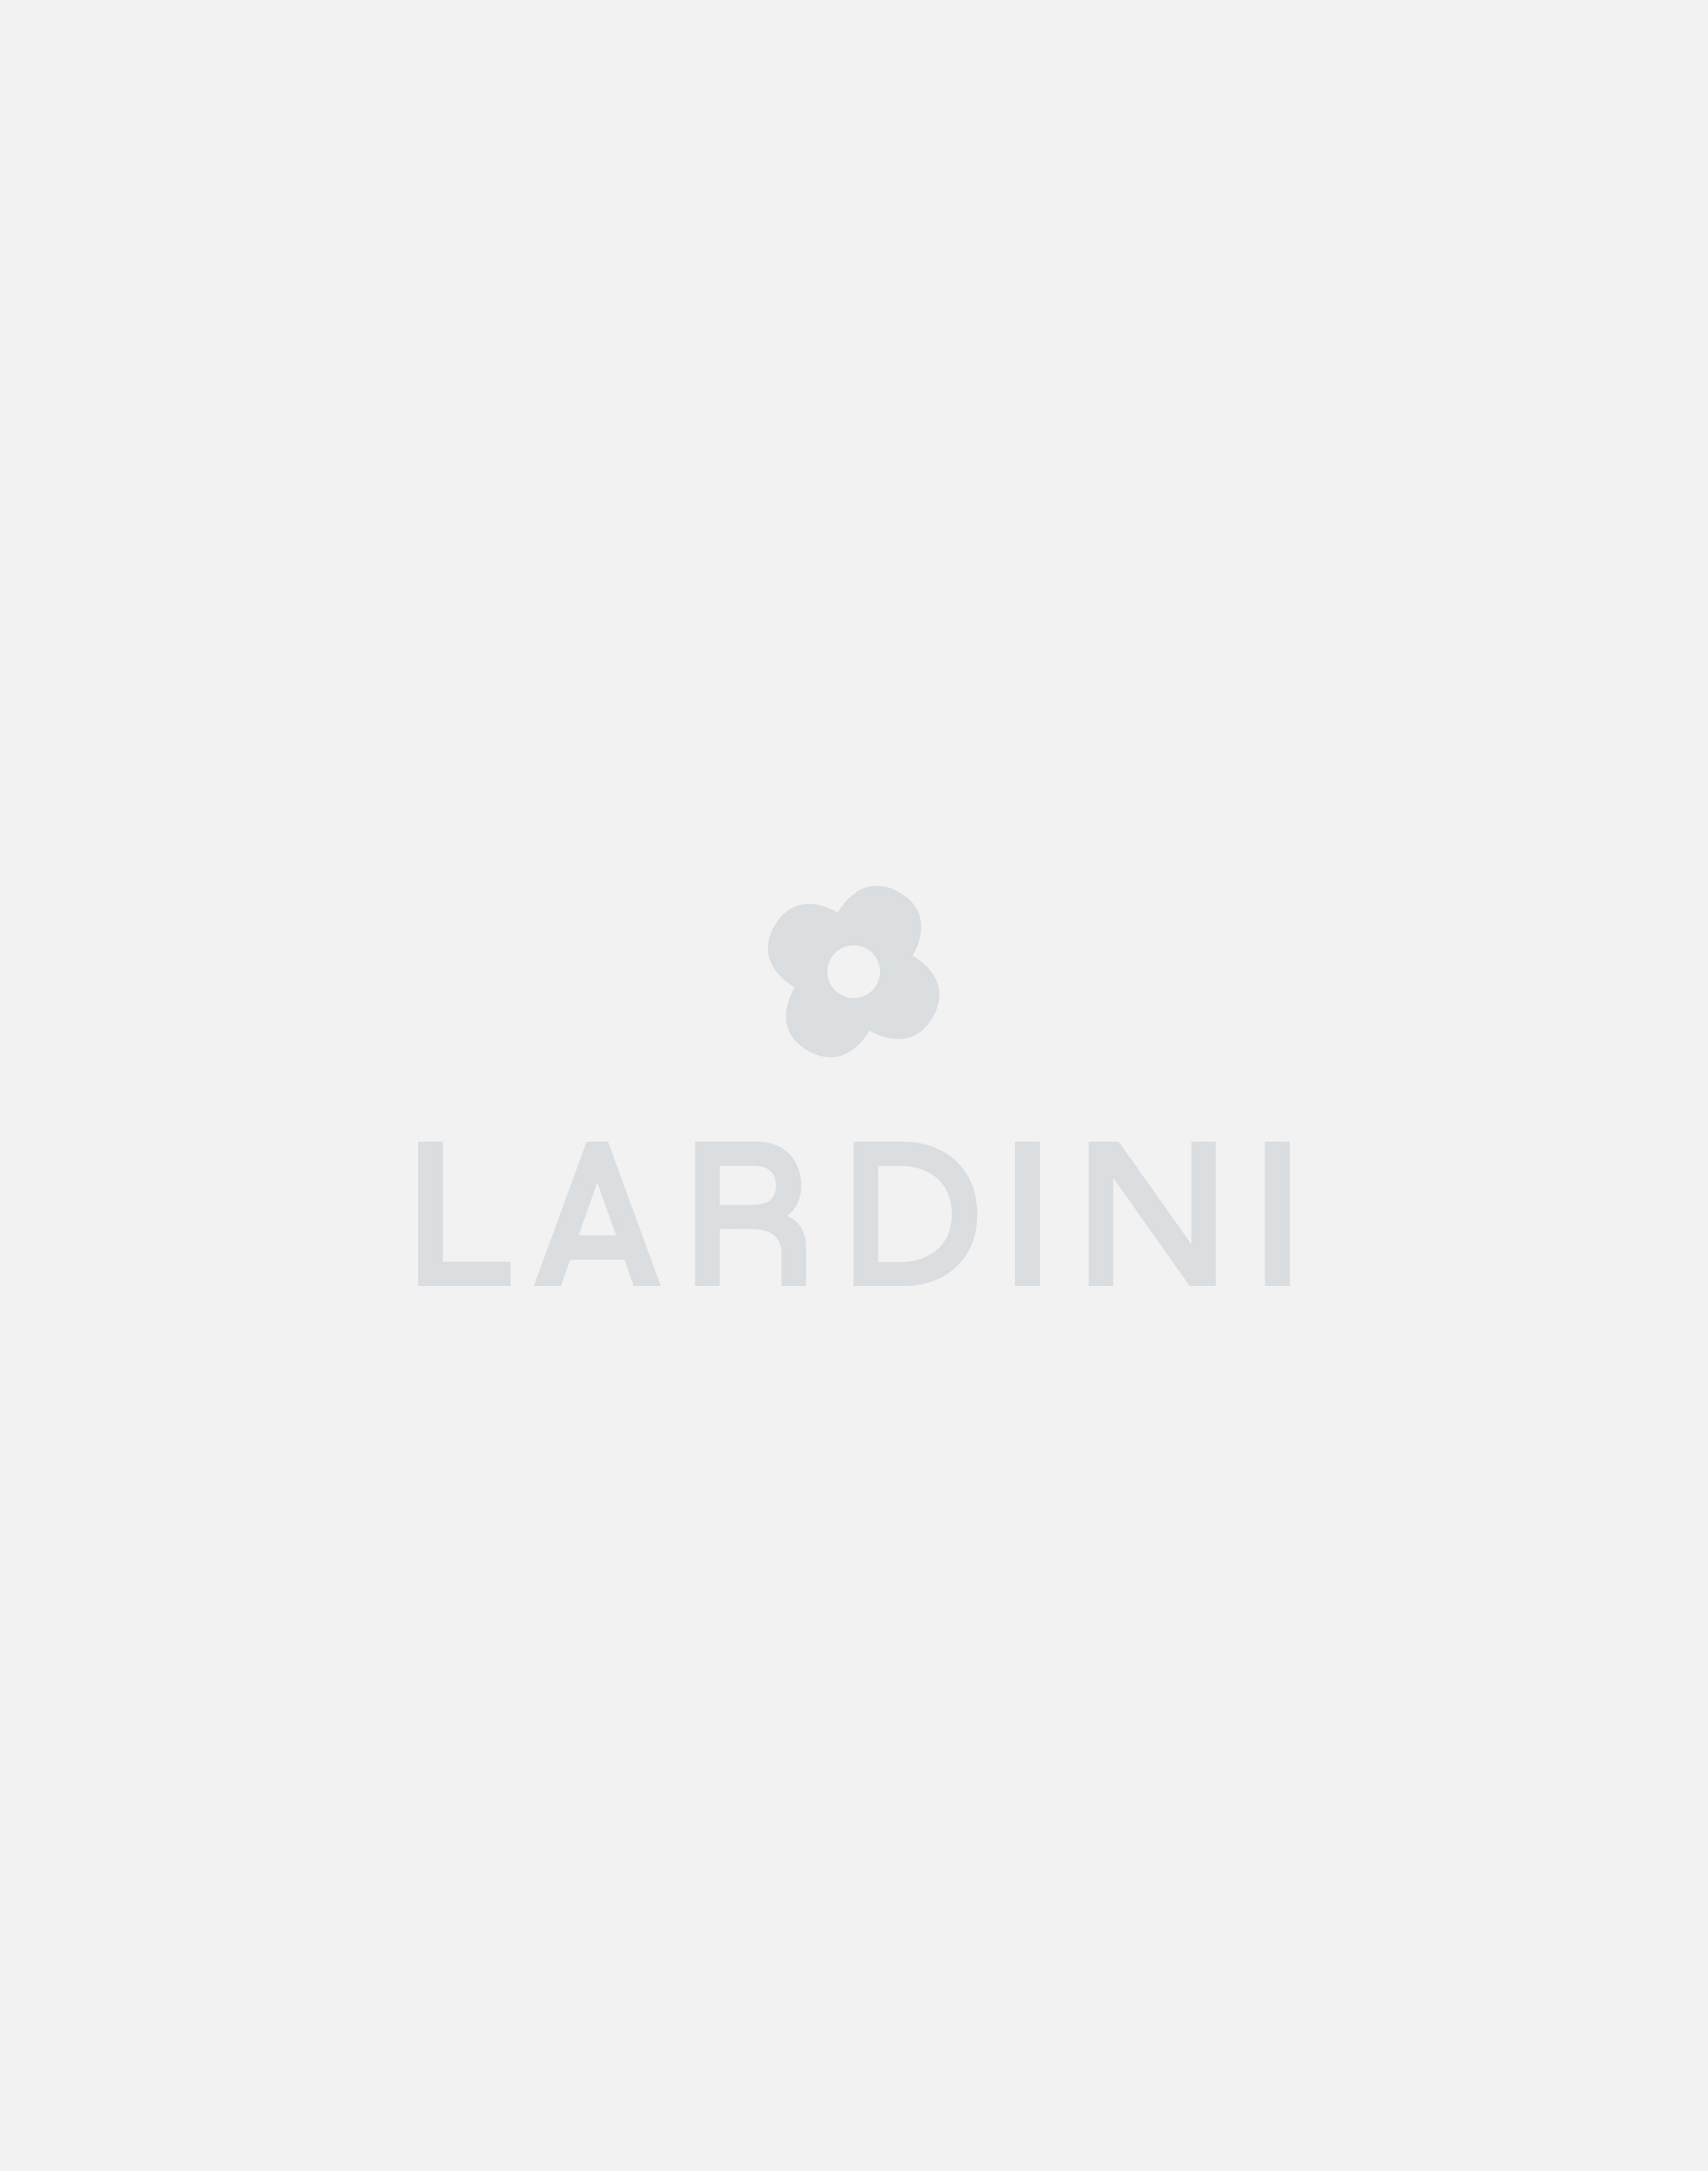 White V-neck sweater - Luigi Lardini capsule 1